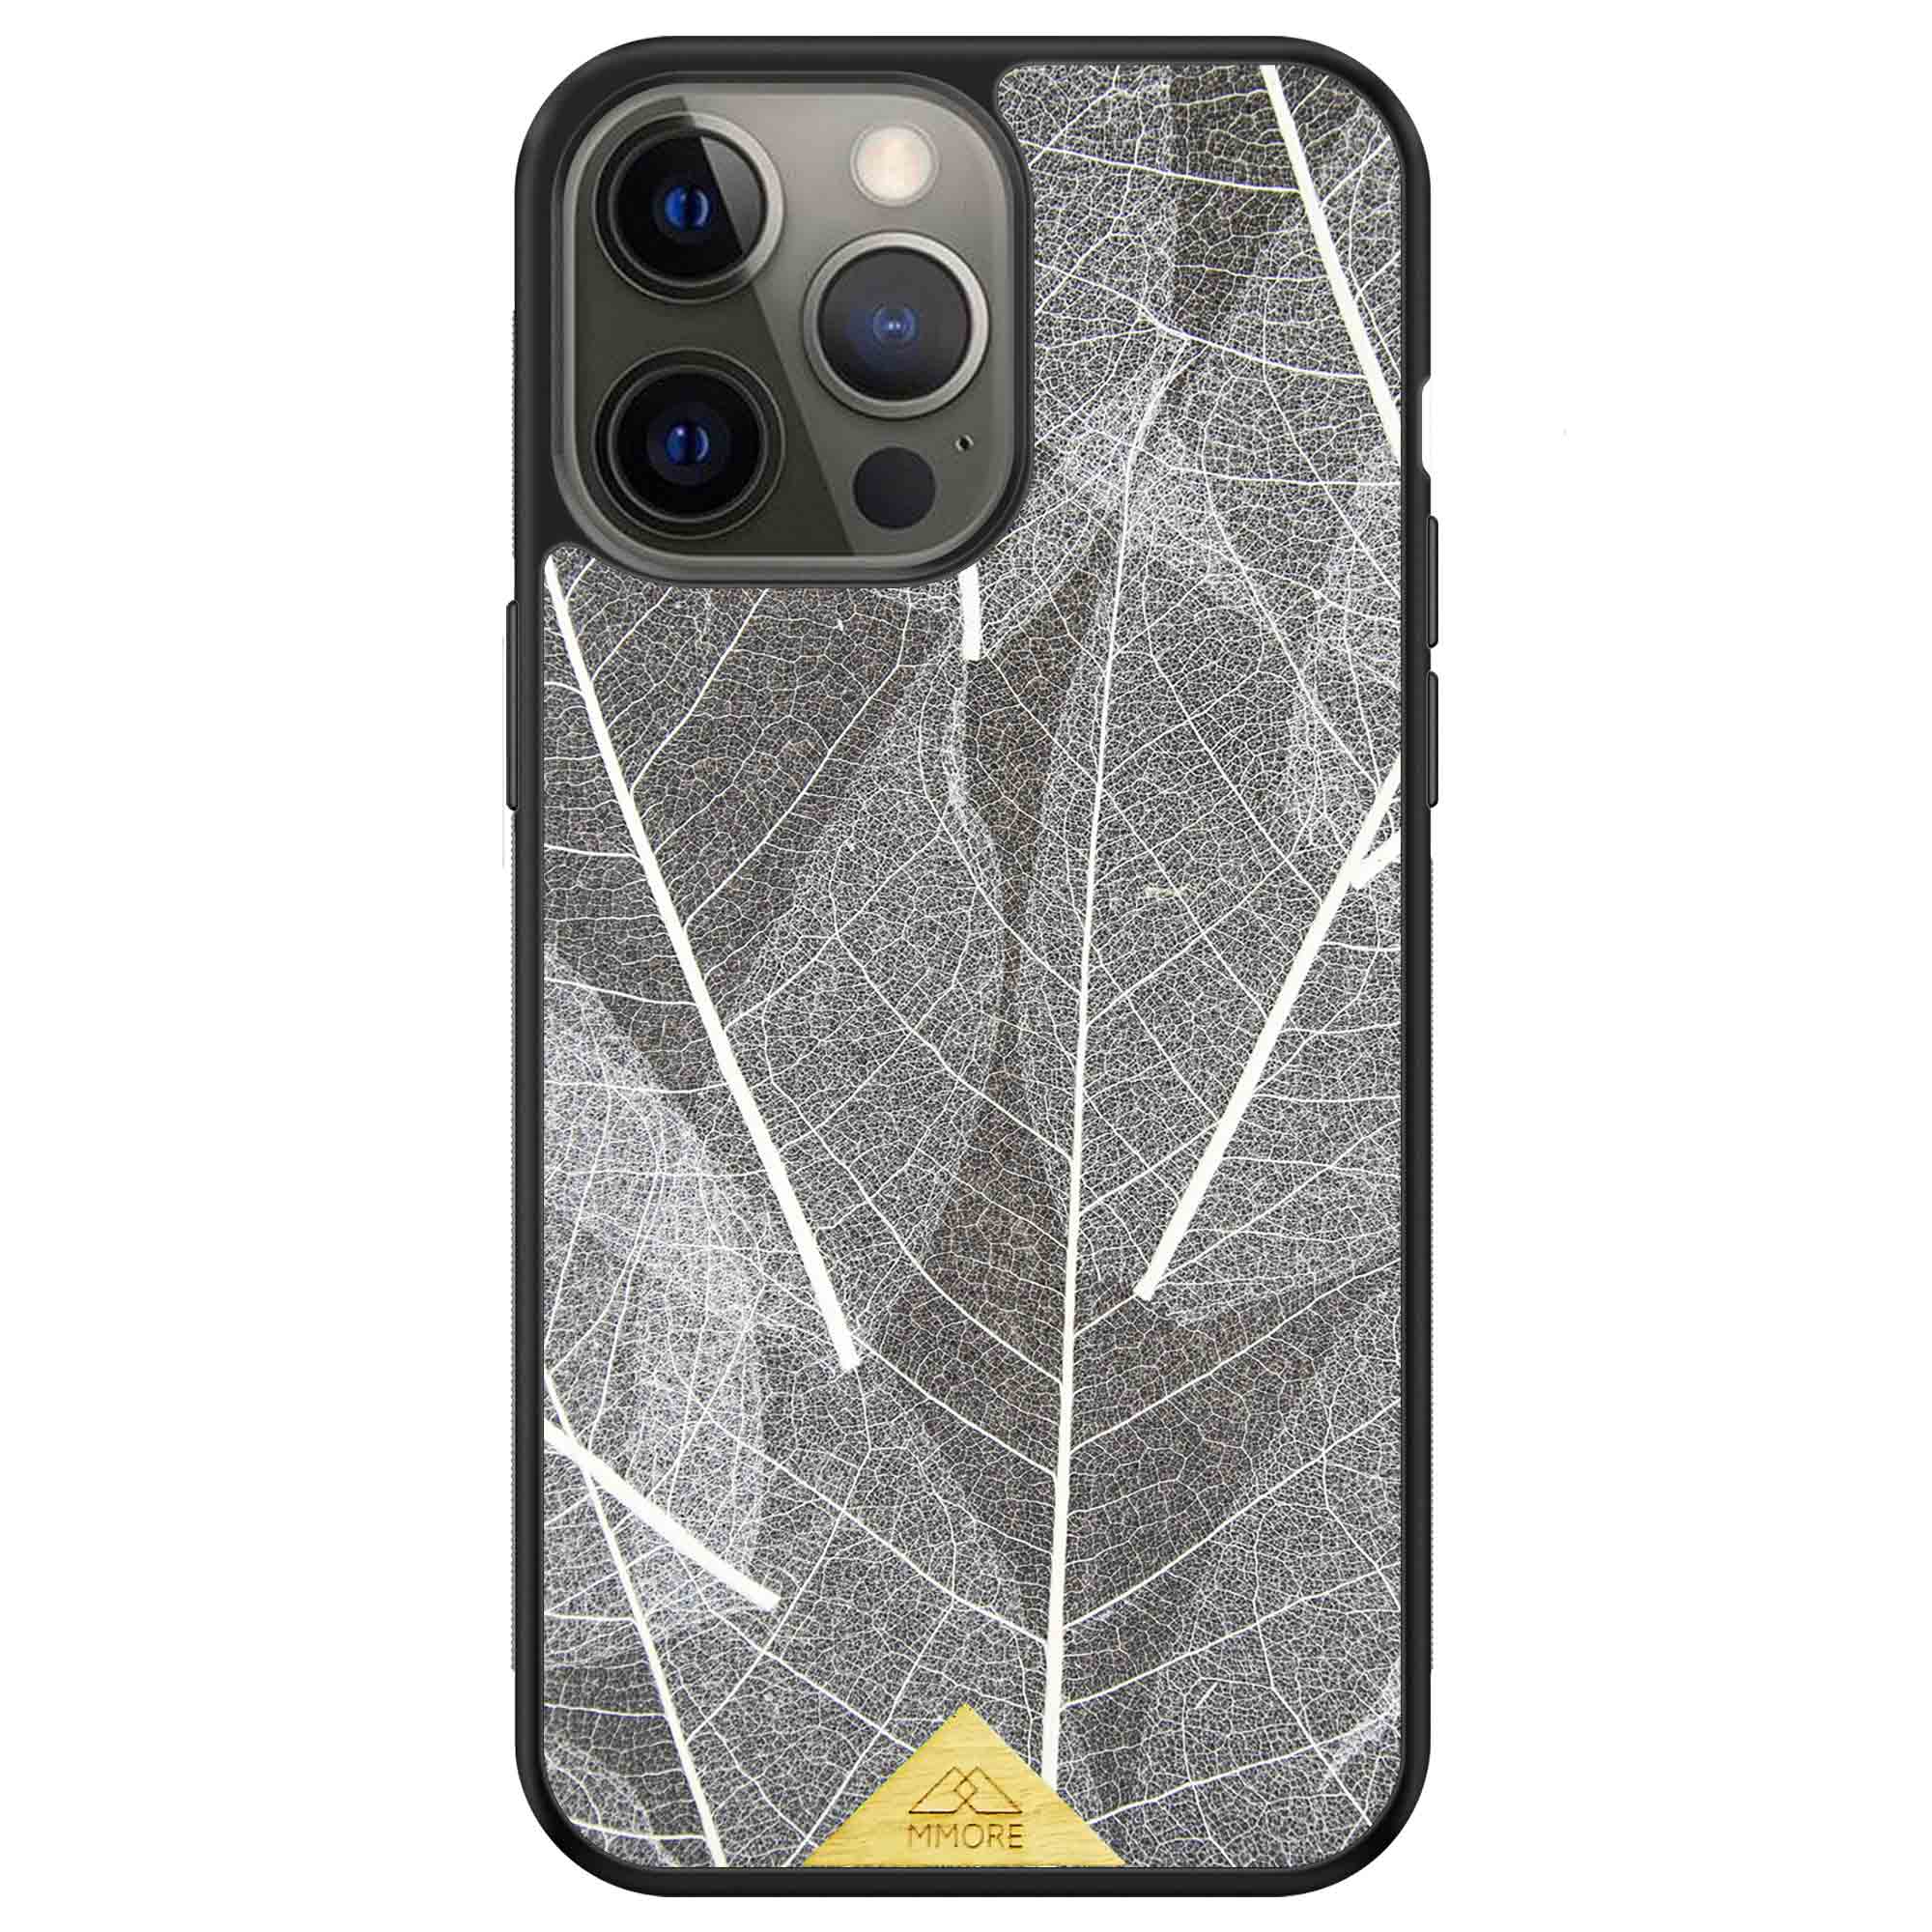 LUOLNH Galaxy S21 Case,Samsung Galaxy S21 Marble Case Brilliant